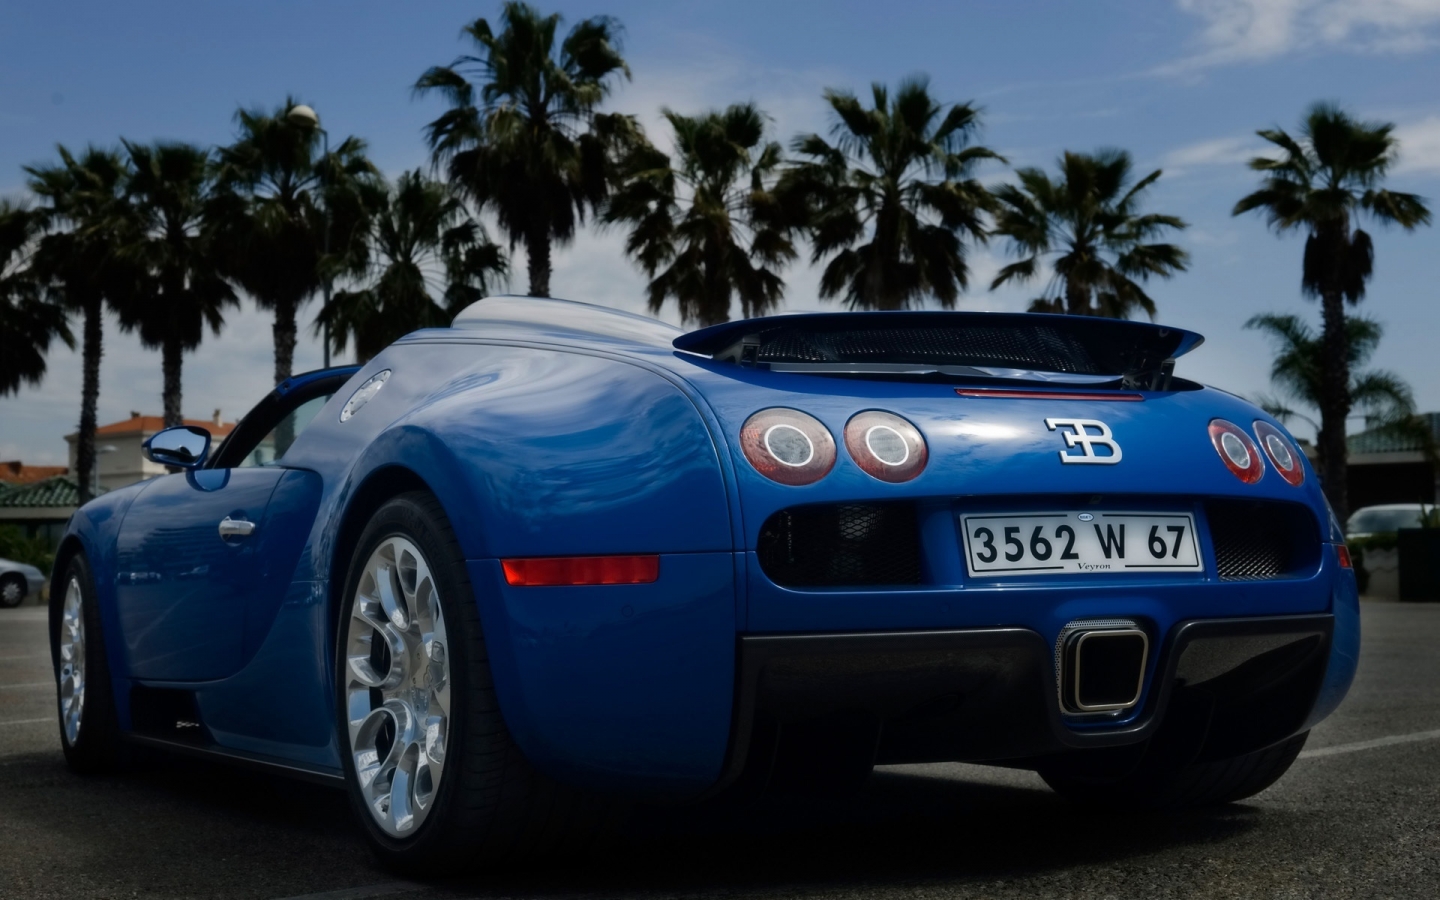 Bugatti Veyron 16.4 Grand Sport 2010 in Cannes - Rear Angle 2 for 1440 x 900 widescreen resolution